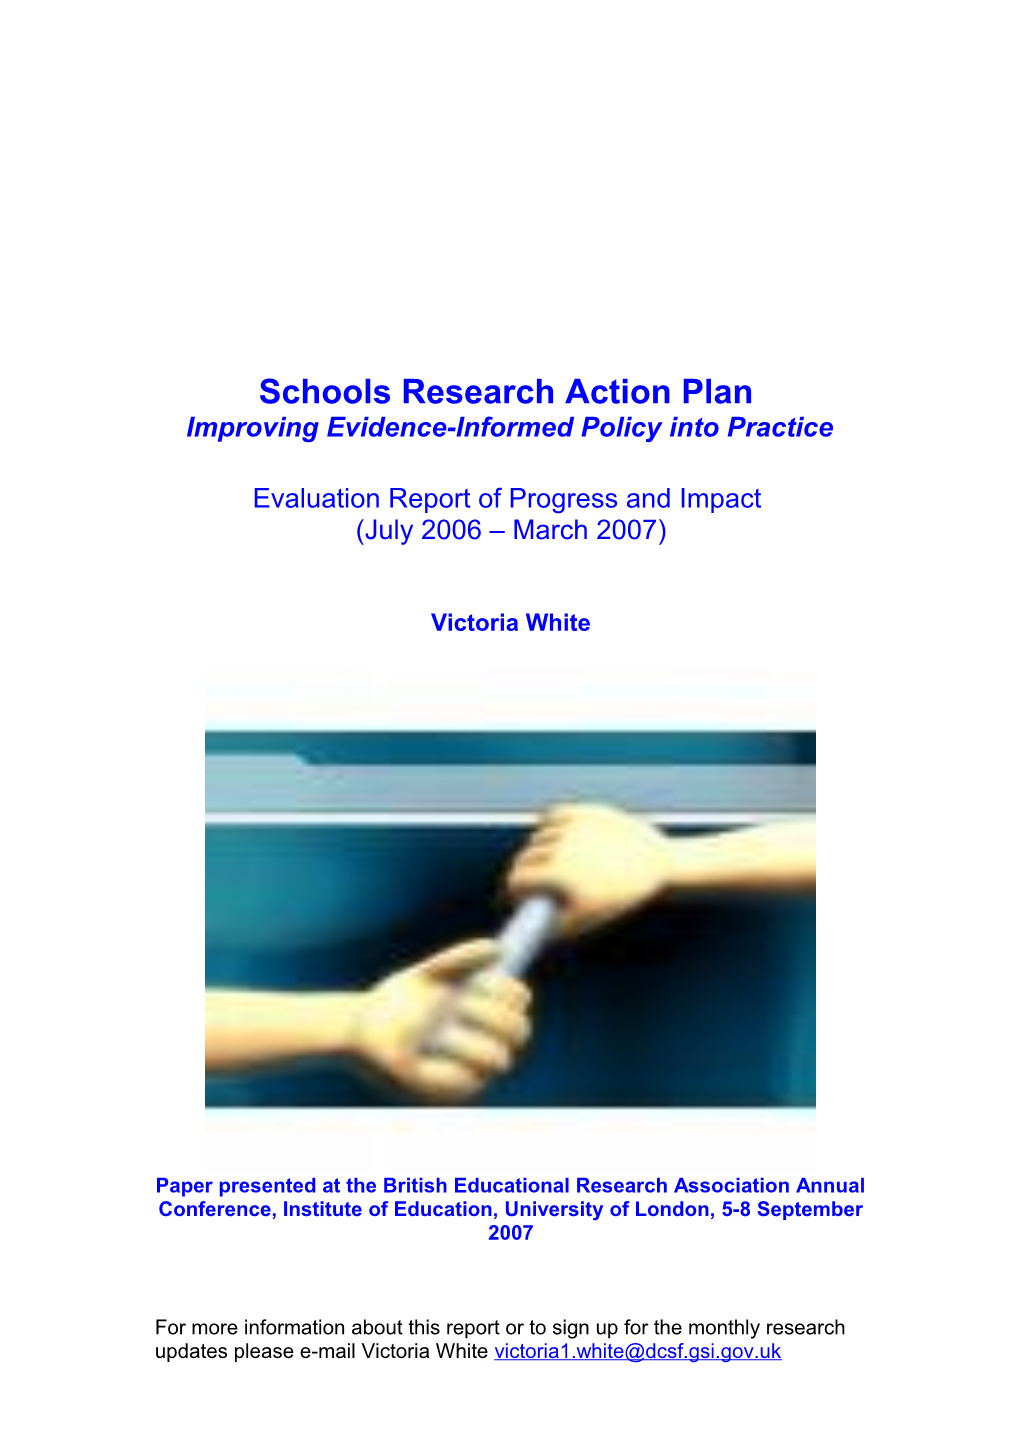 Schools Directorate Research Action Plan